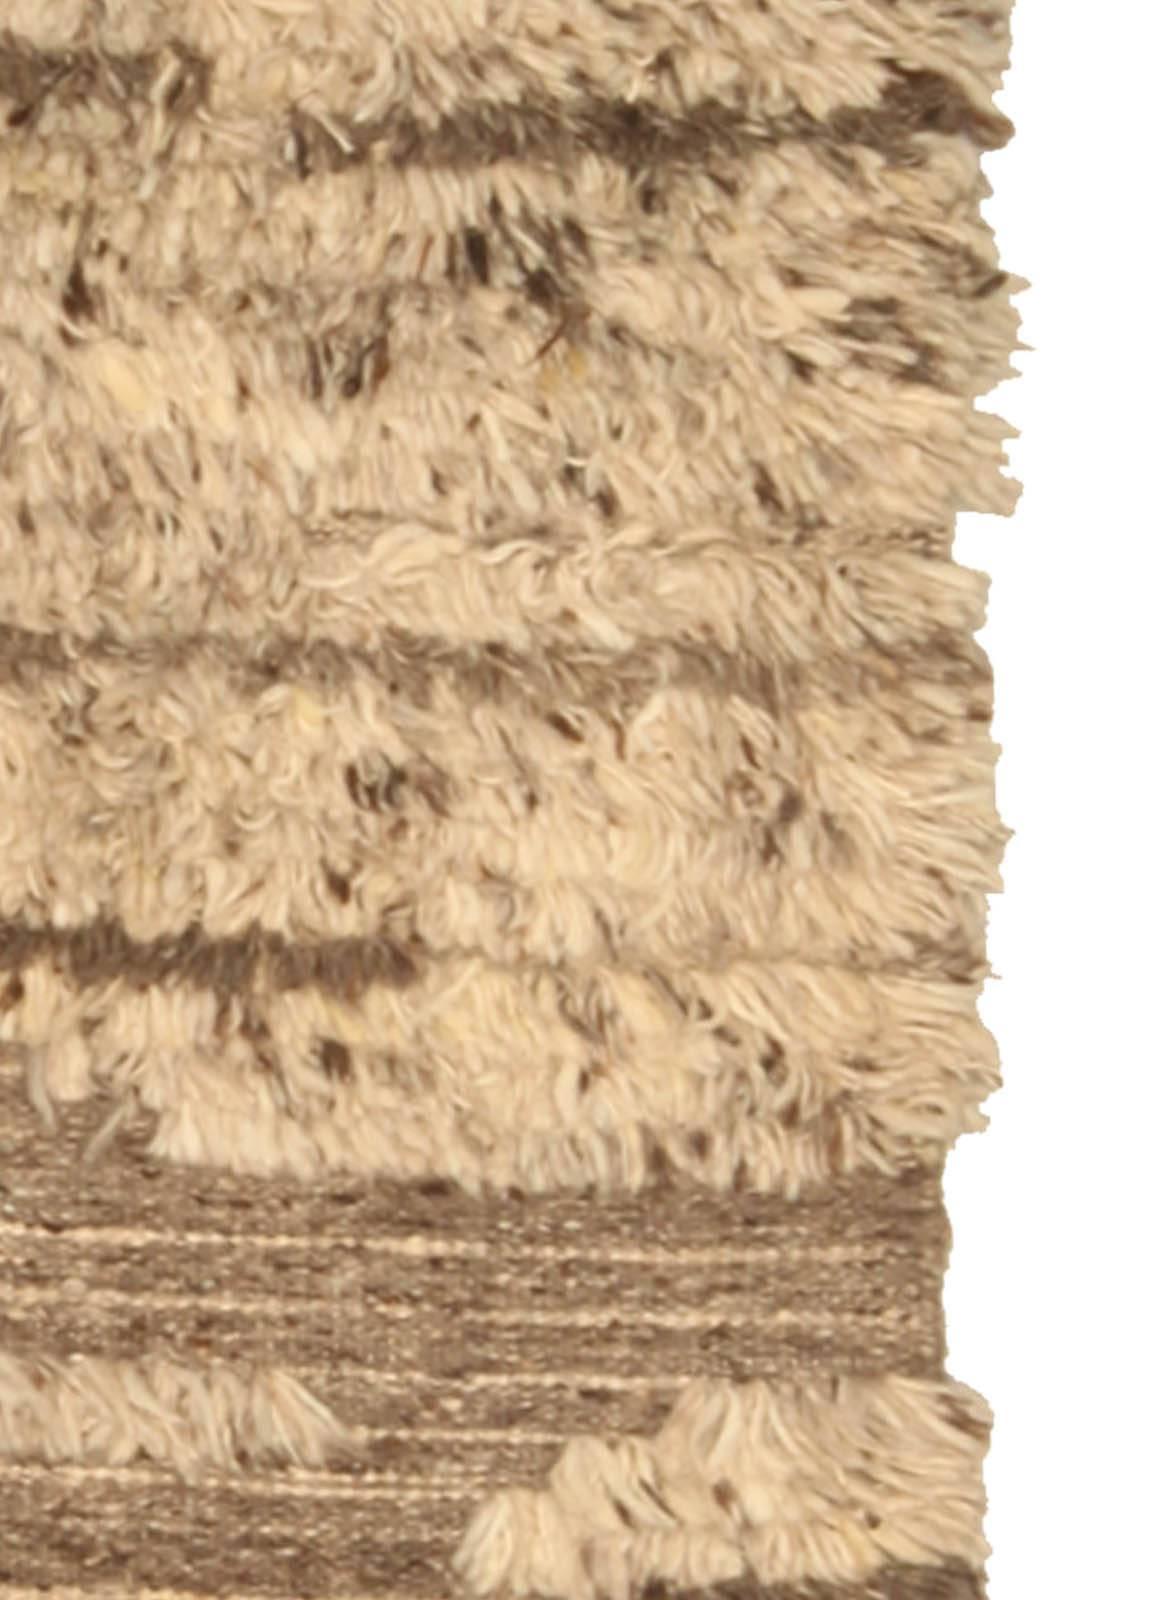 Contemporary Tribal Tulu Nadu Style Shaggy Wool Rug by Doris Leslie Blau For Sale 2